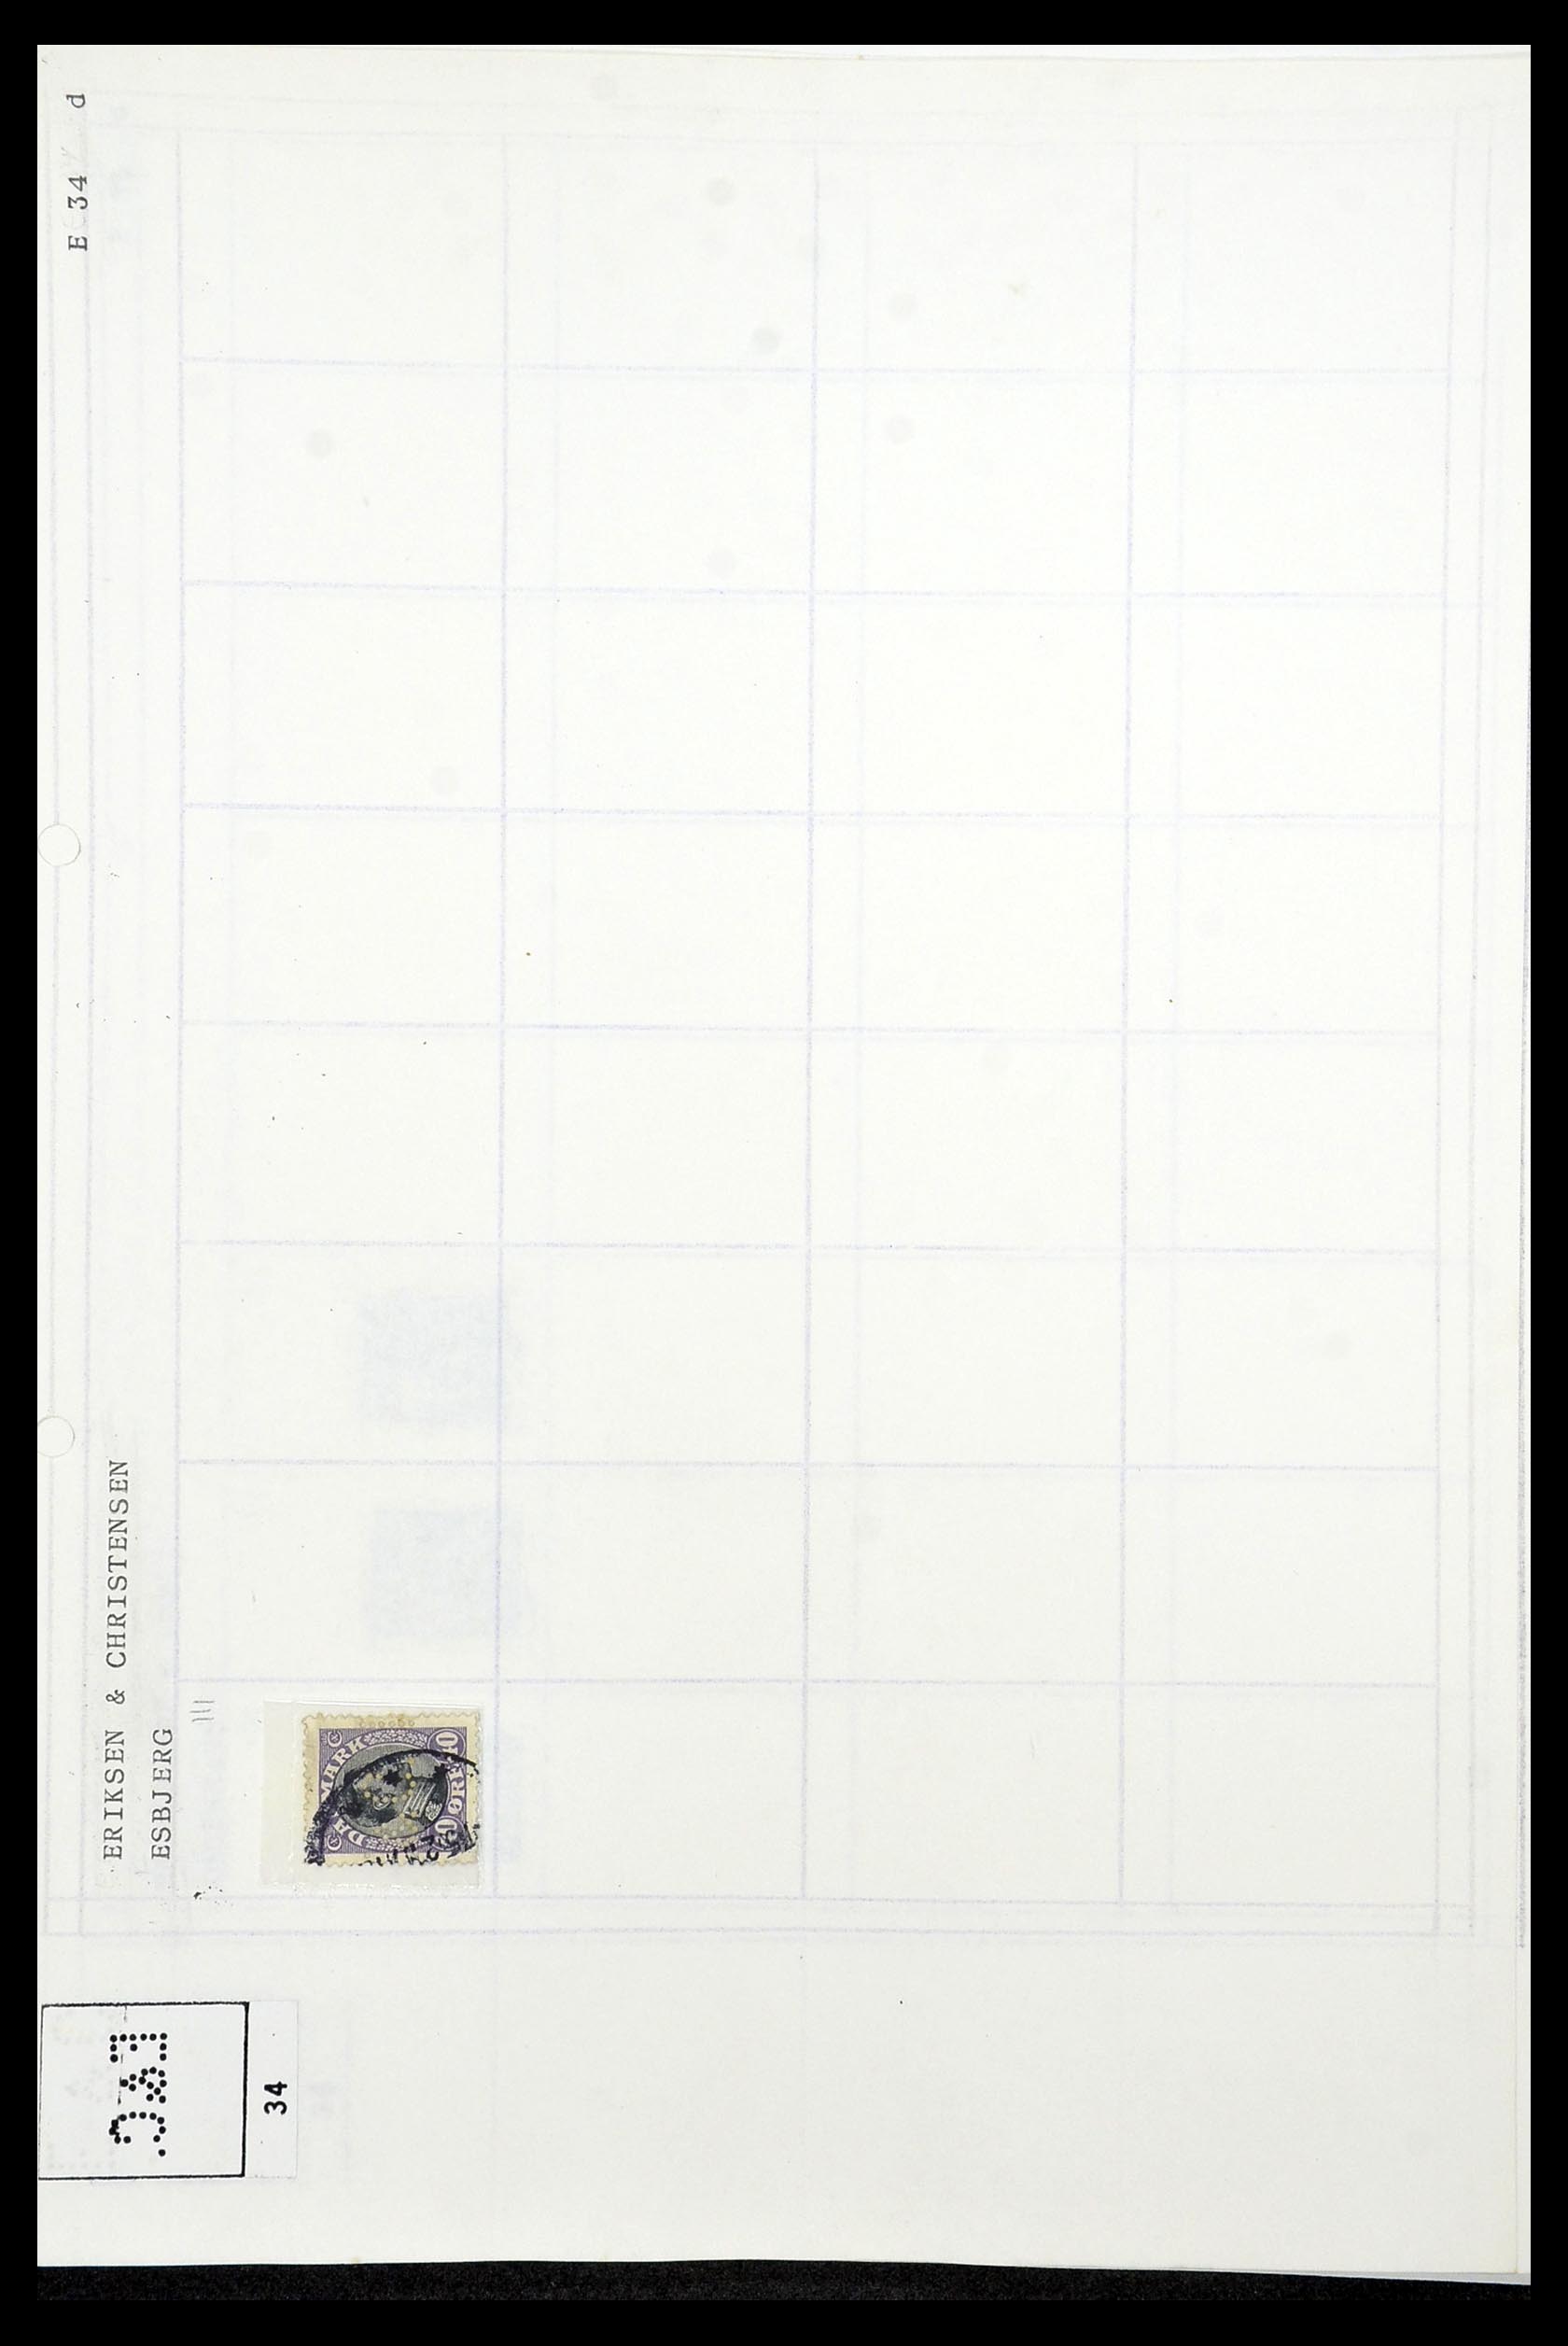 34415 089 - Stamp Collection 34415 Denmark perfins 1875-1980.